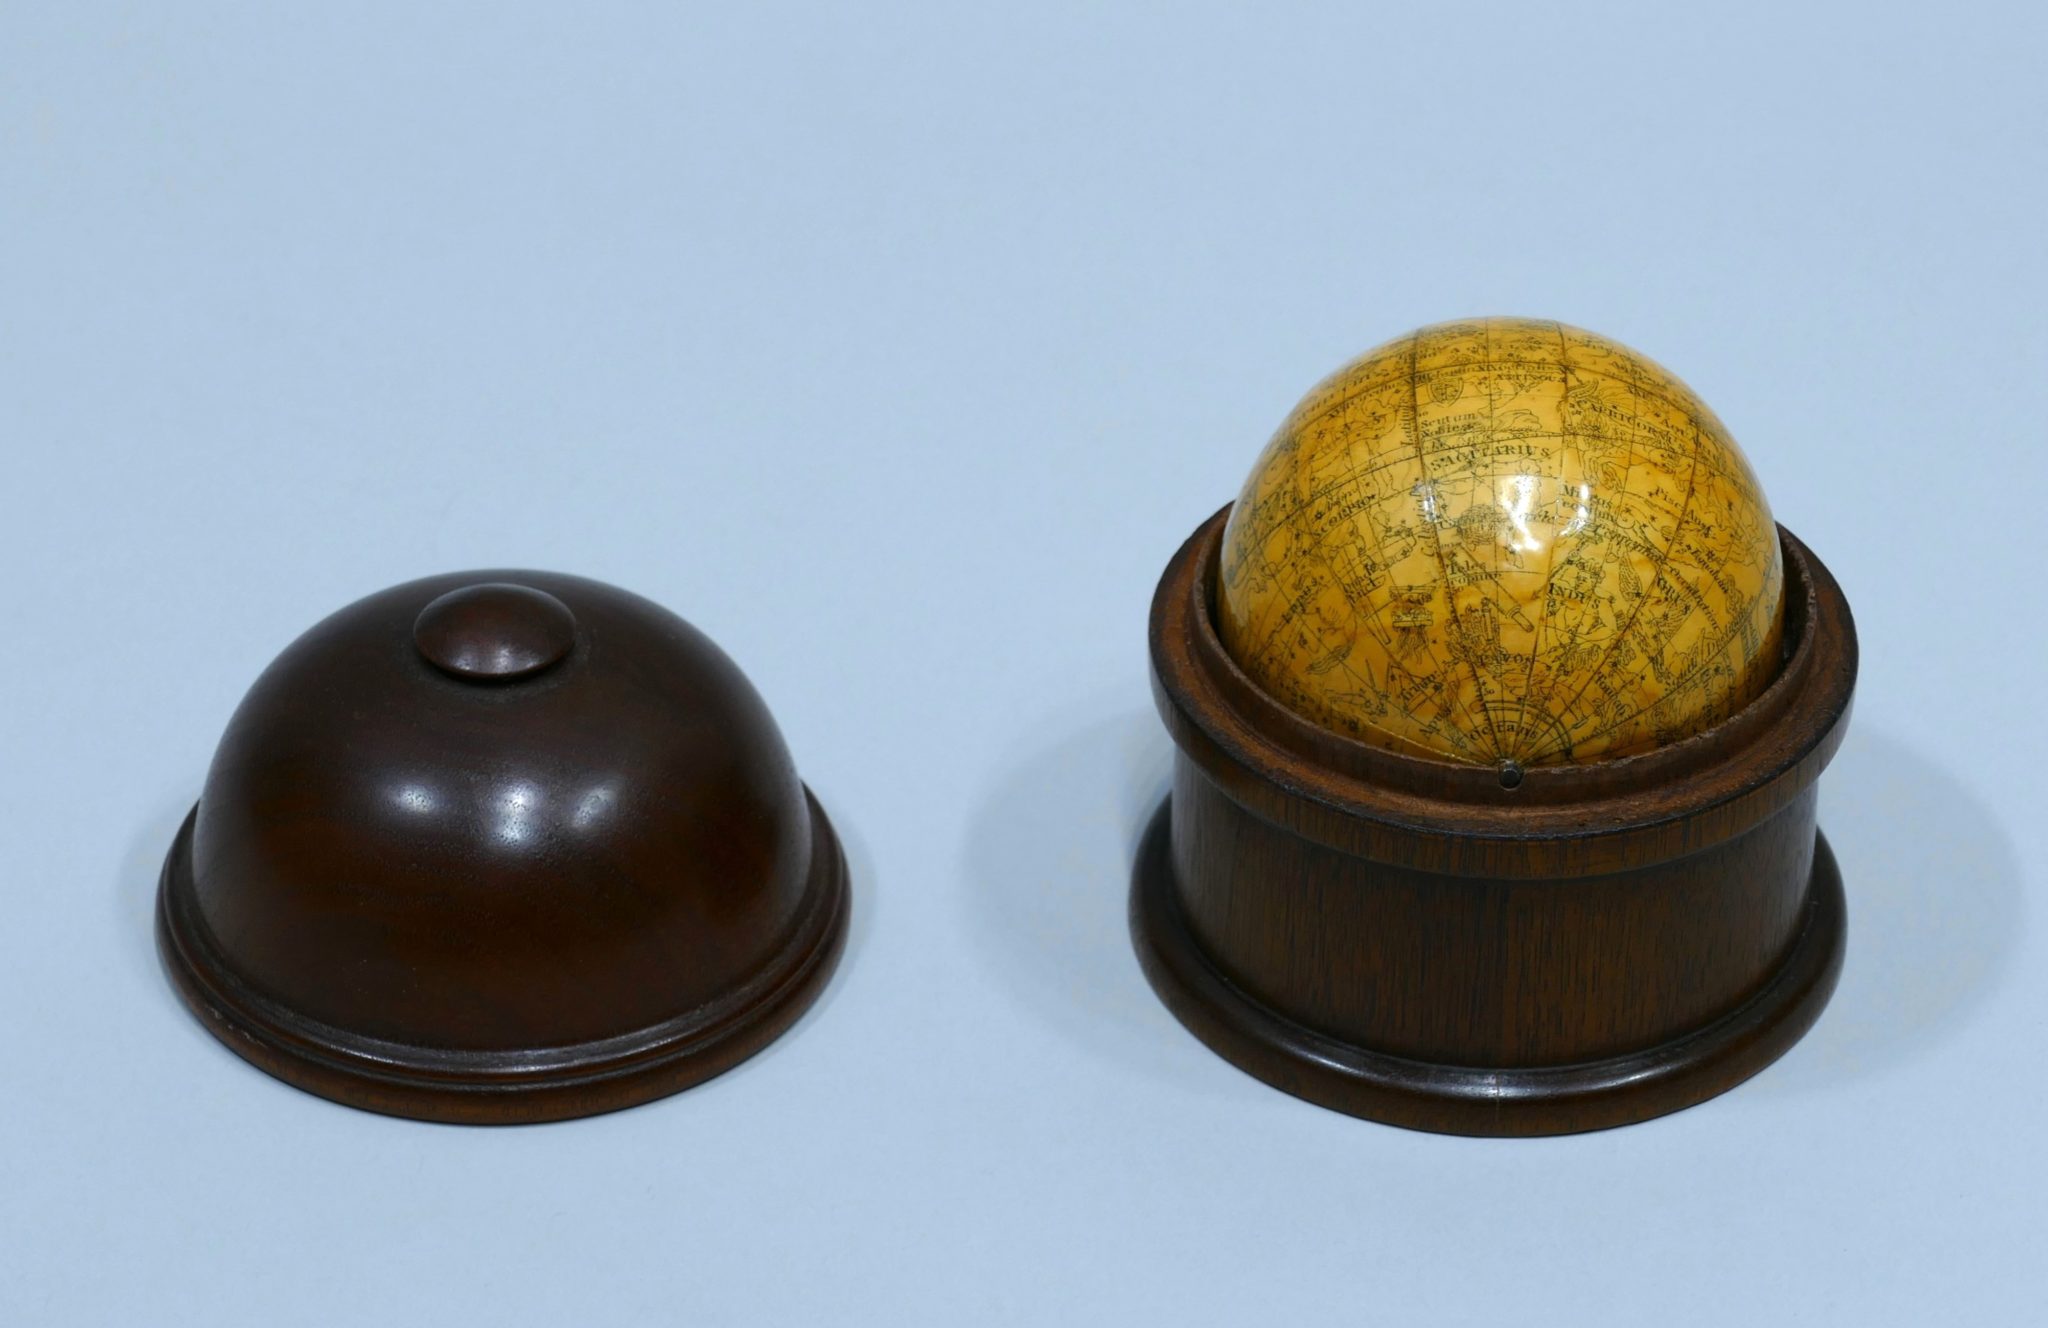 Celestial globe signed NEWTON’S Improved Pocket Celestial GLOBE made in London circa 1820/1830